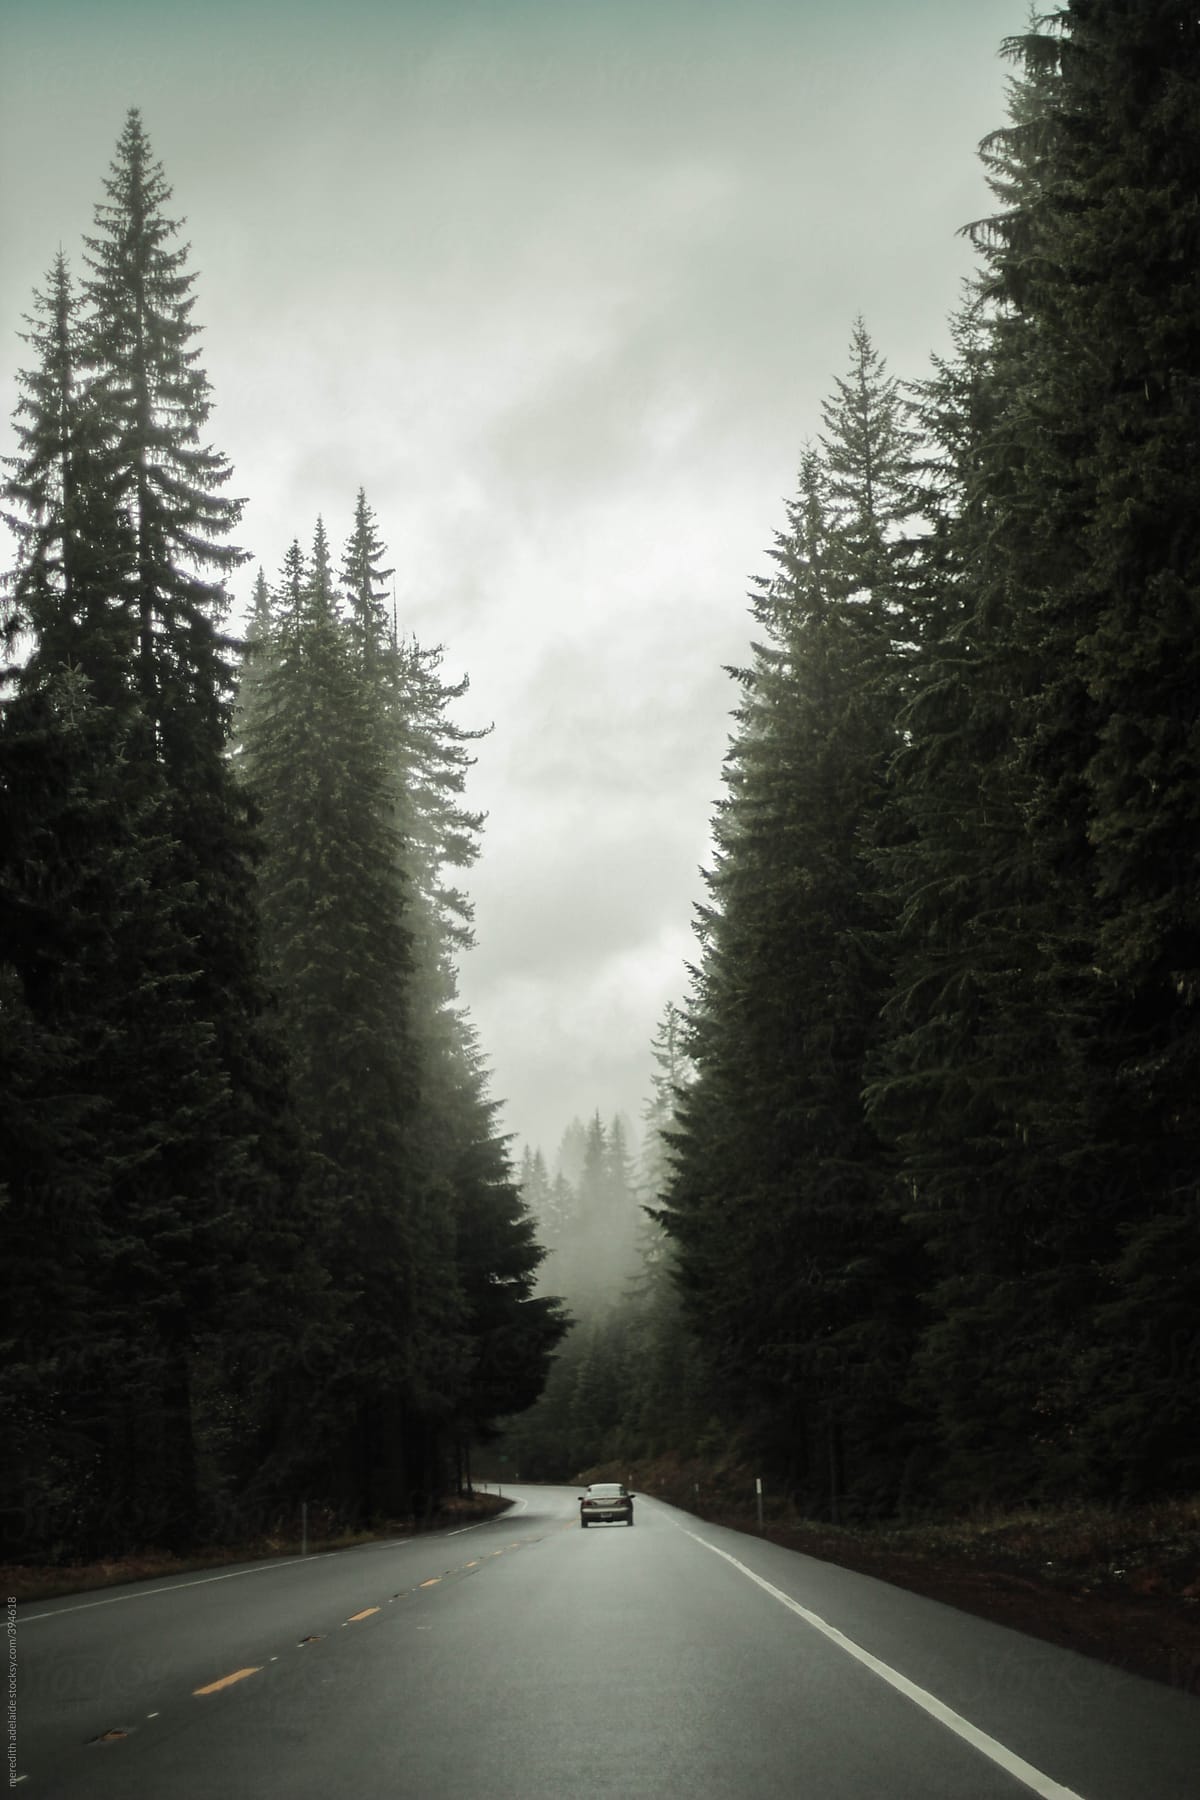 Following on a Foggy Open Oregon Road